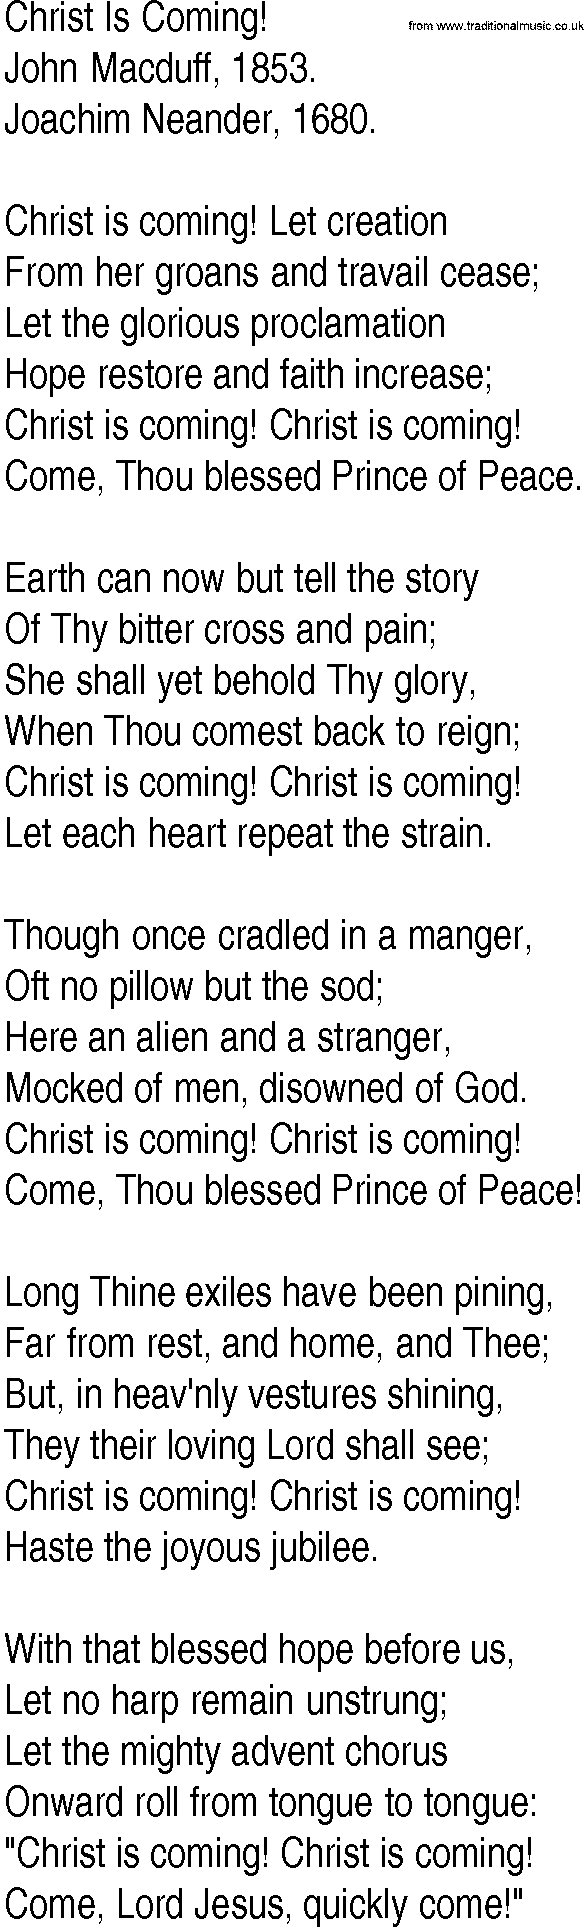 Hymn and Gospel Song: Christ Is Coming! by John Macduff lyrics